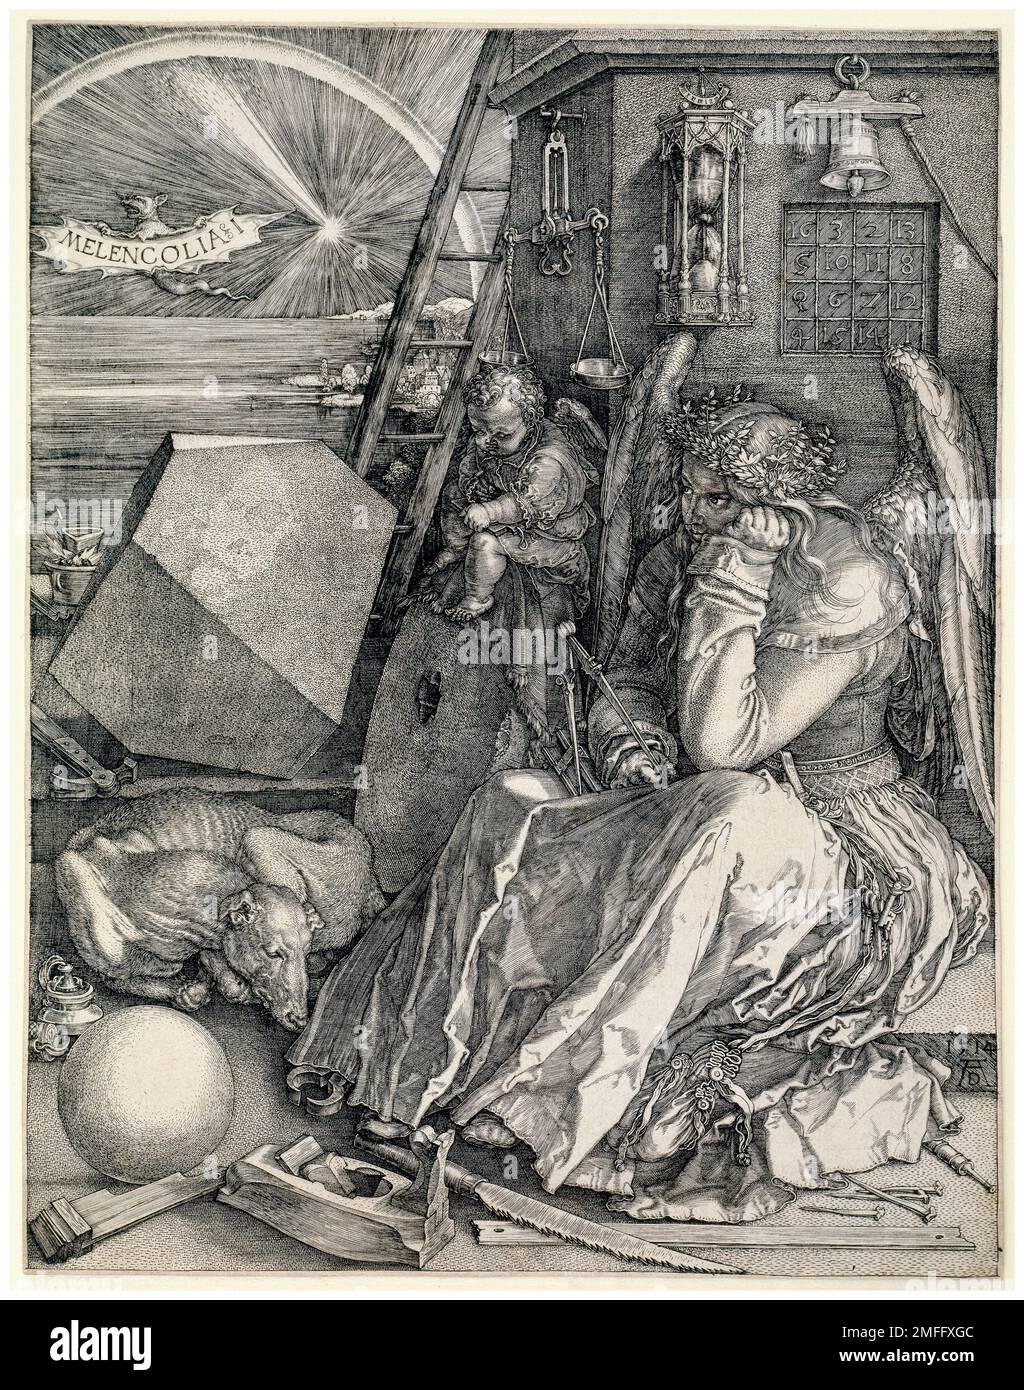 Albrecht Durer, Melencolia I (The Melancholy), copperplate engraving, 1514 Stock Photo